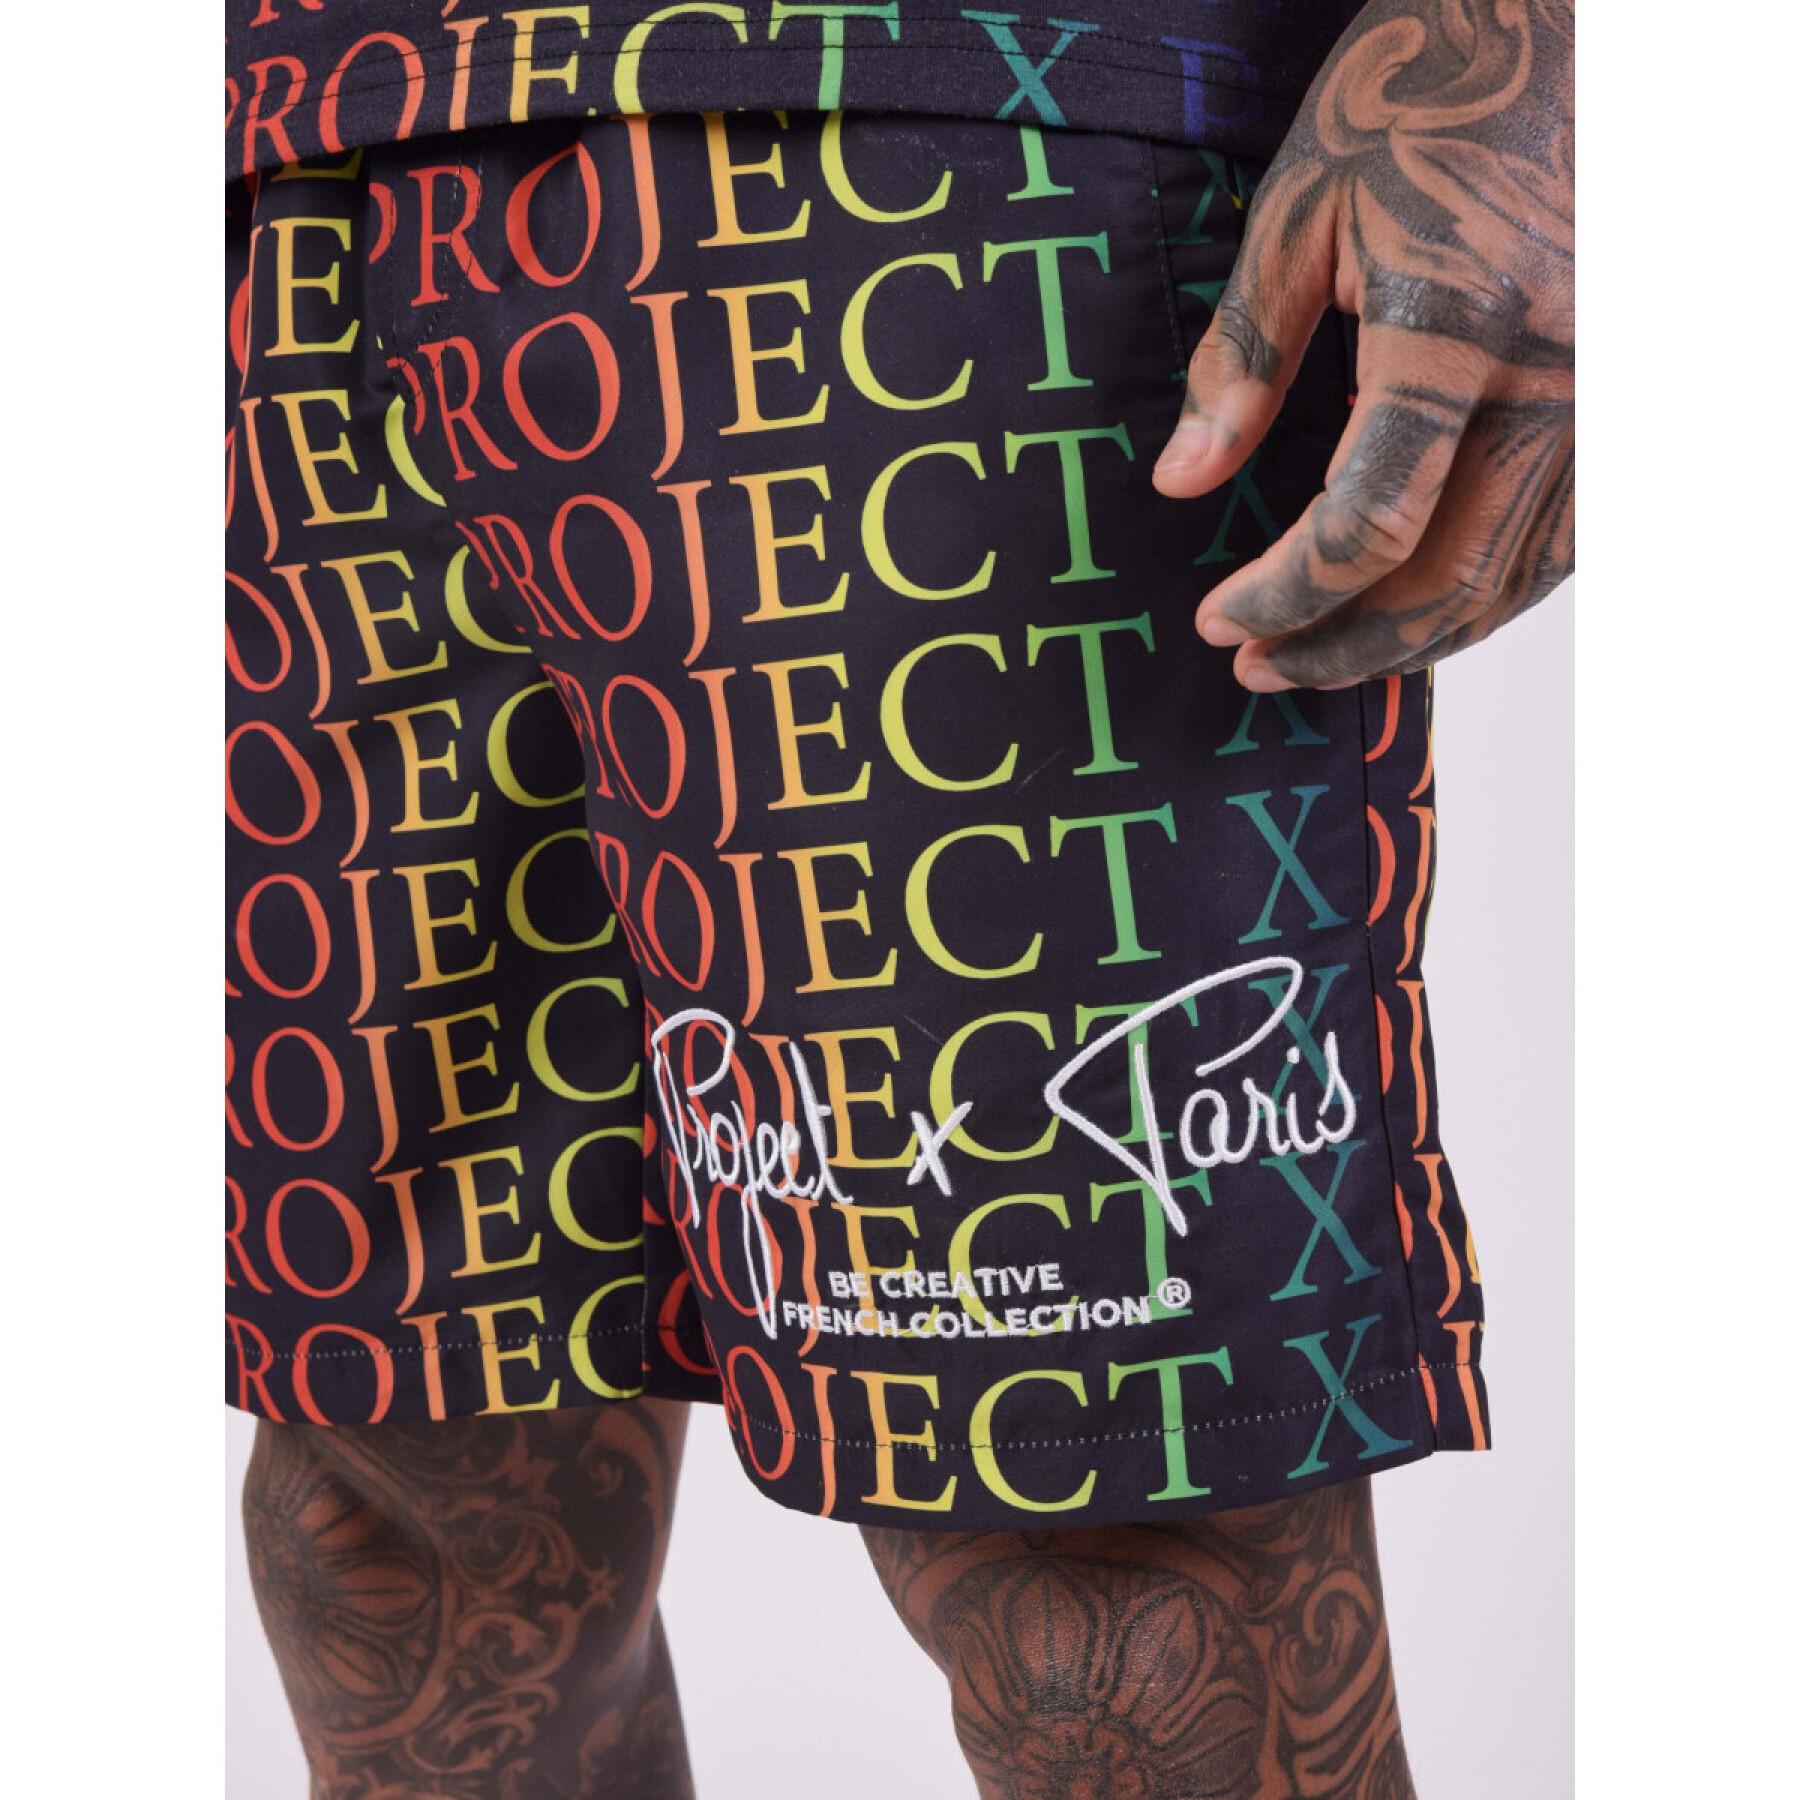 Pantaloncini con logo sfumato arcobaleno Project X Paris